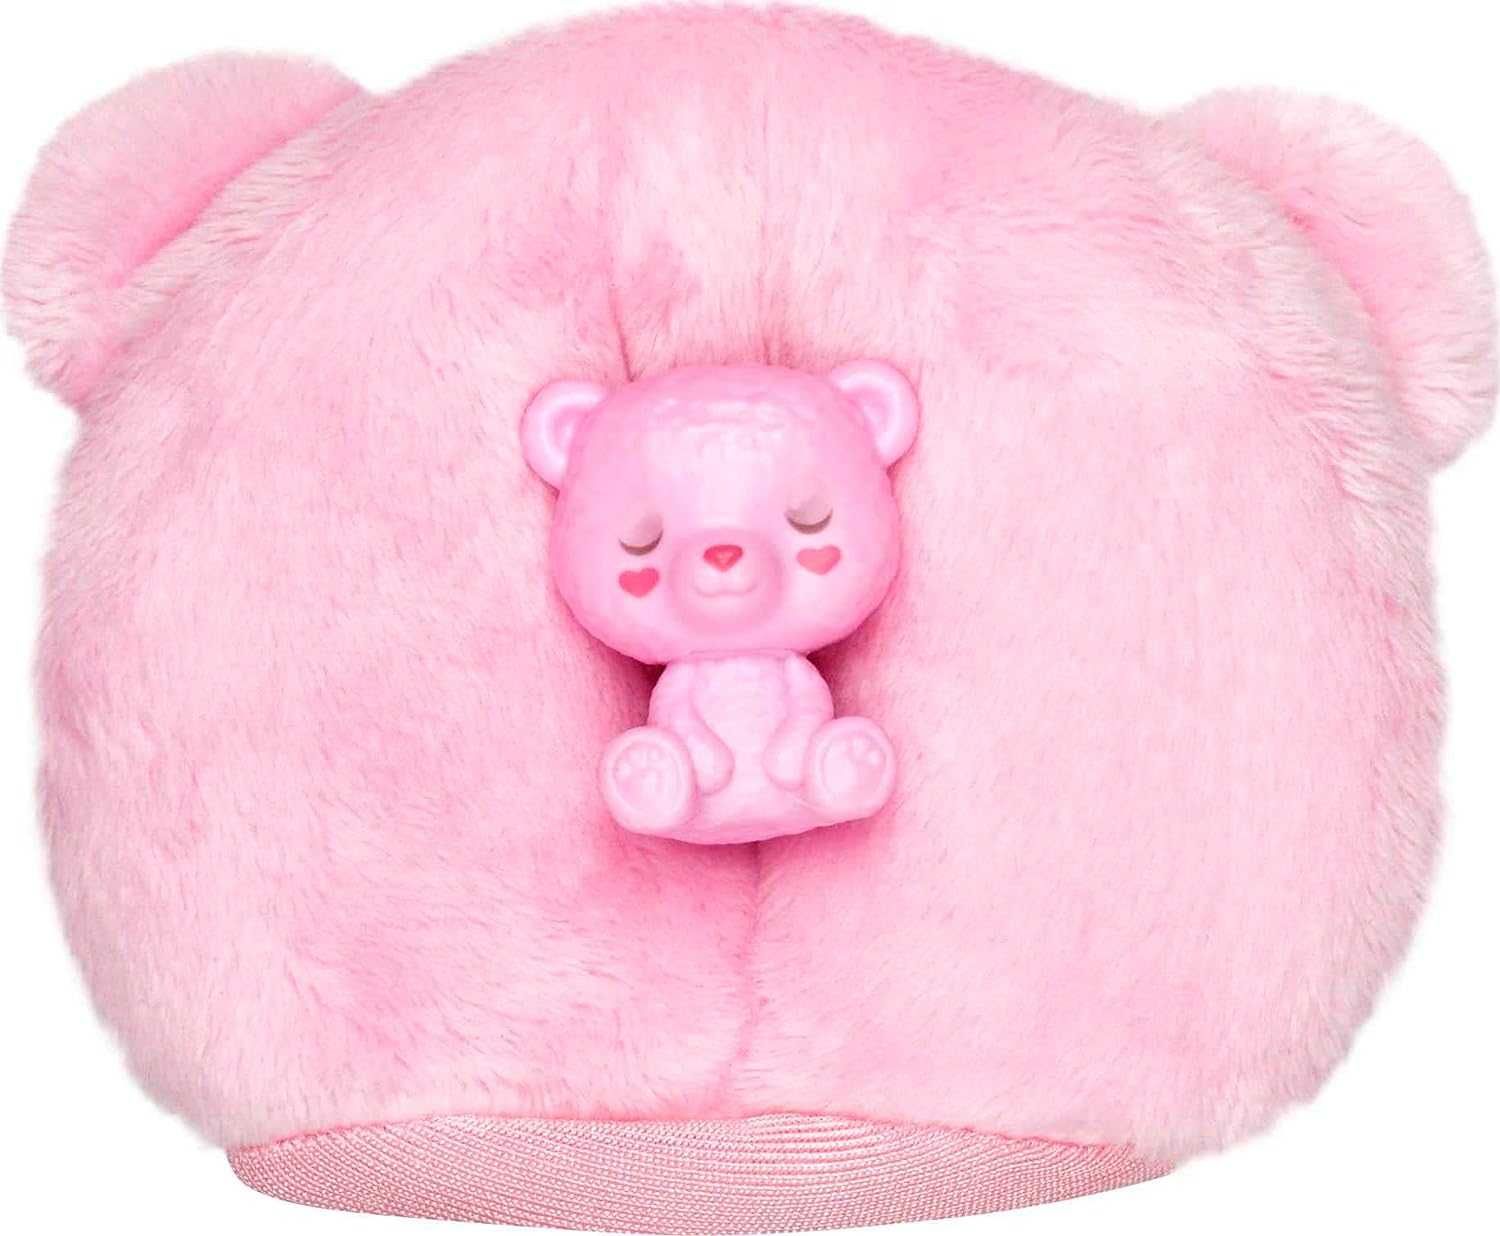 Barbie Cutie Reveal Doll with Pink Hair & Teddy Bear Барбі Ведмедик